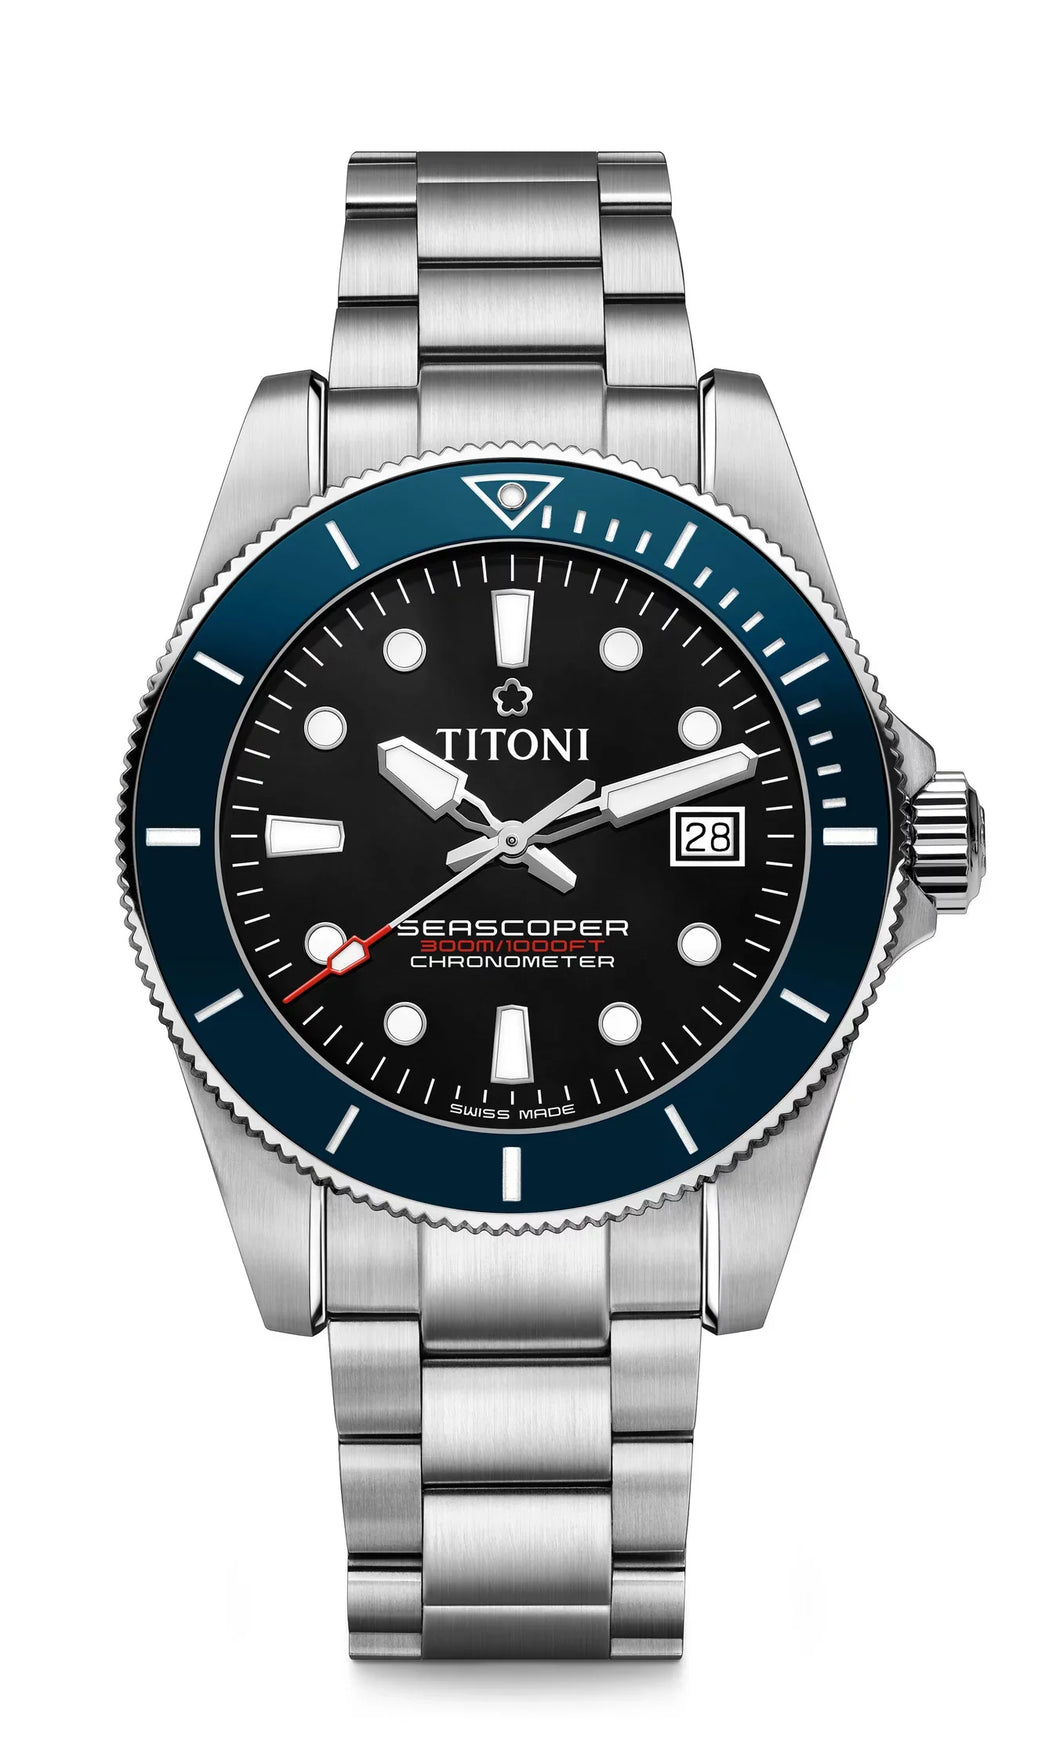 TITONI Seascoper 300 Divers COSC Automatic Watch 83300 S-BE-706